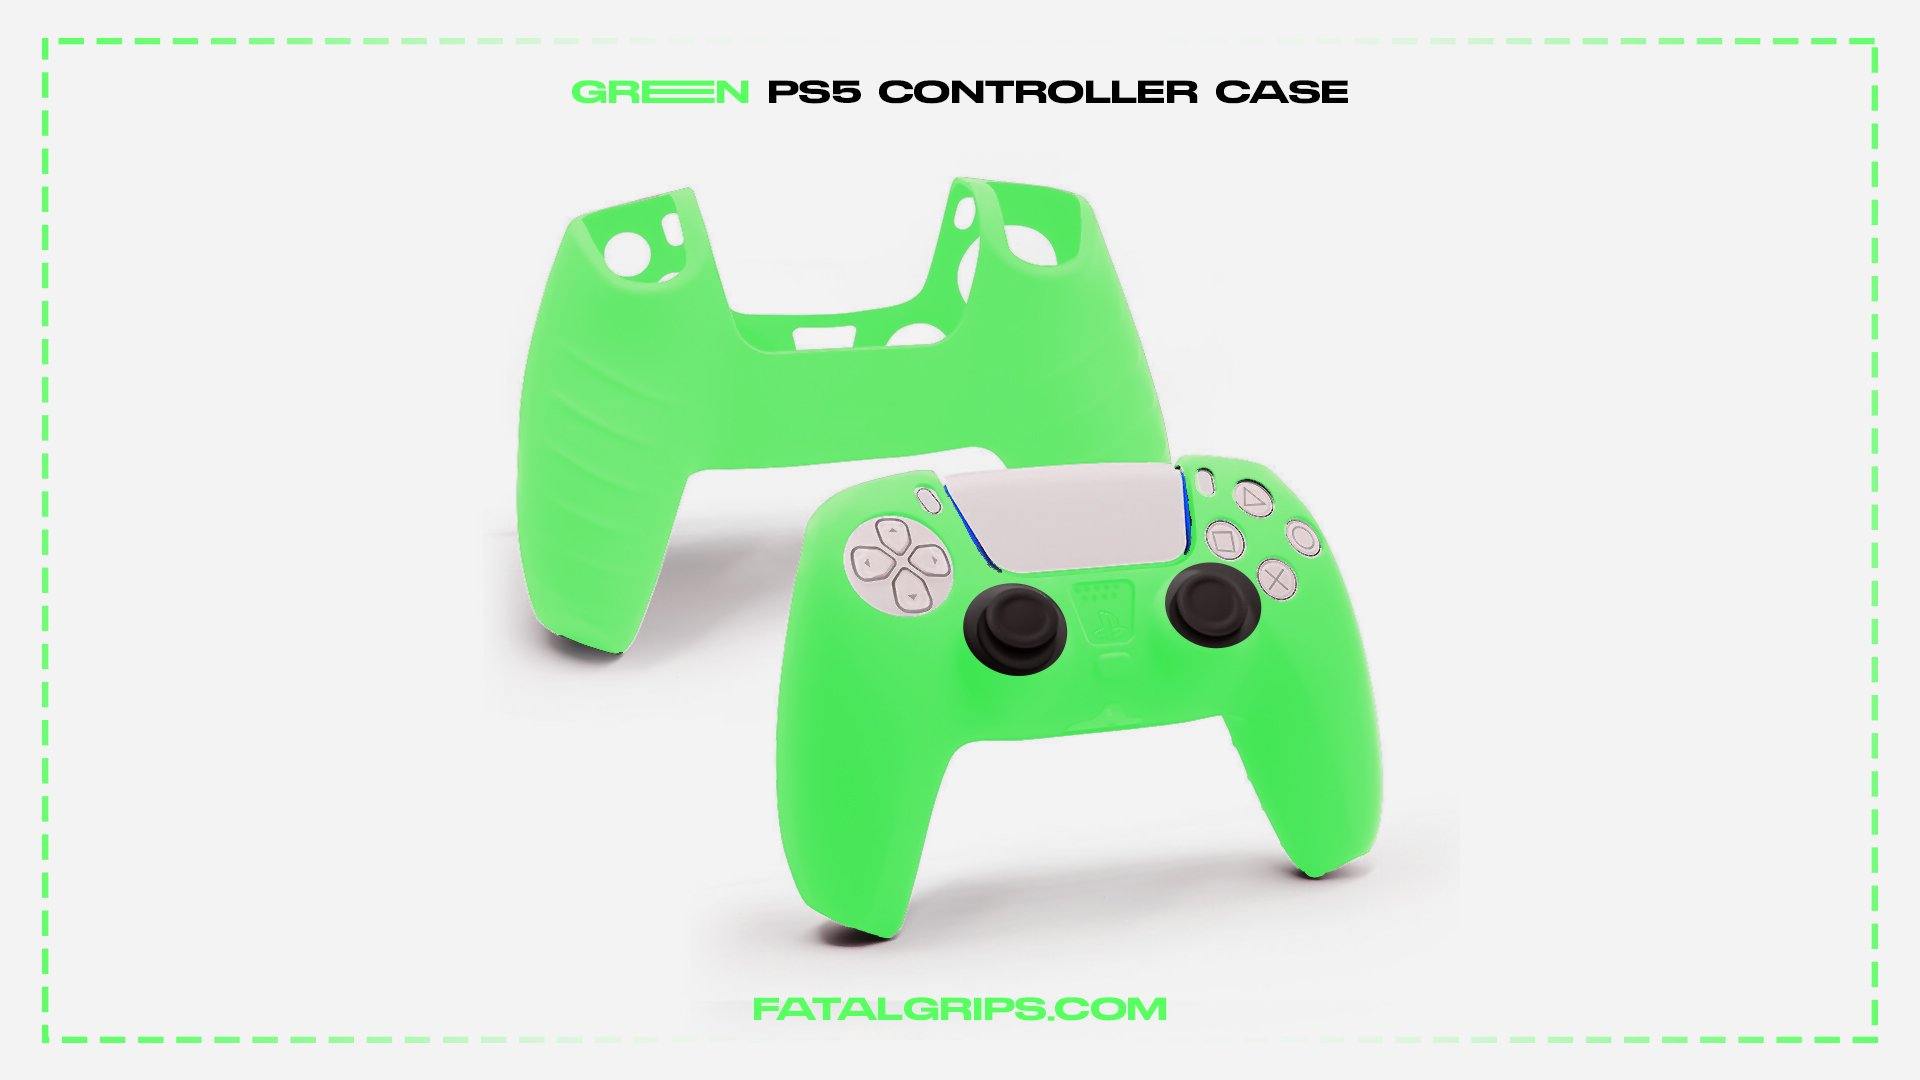 Green PS5 Controller Case - Fatal Grips